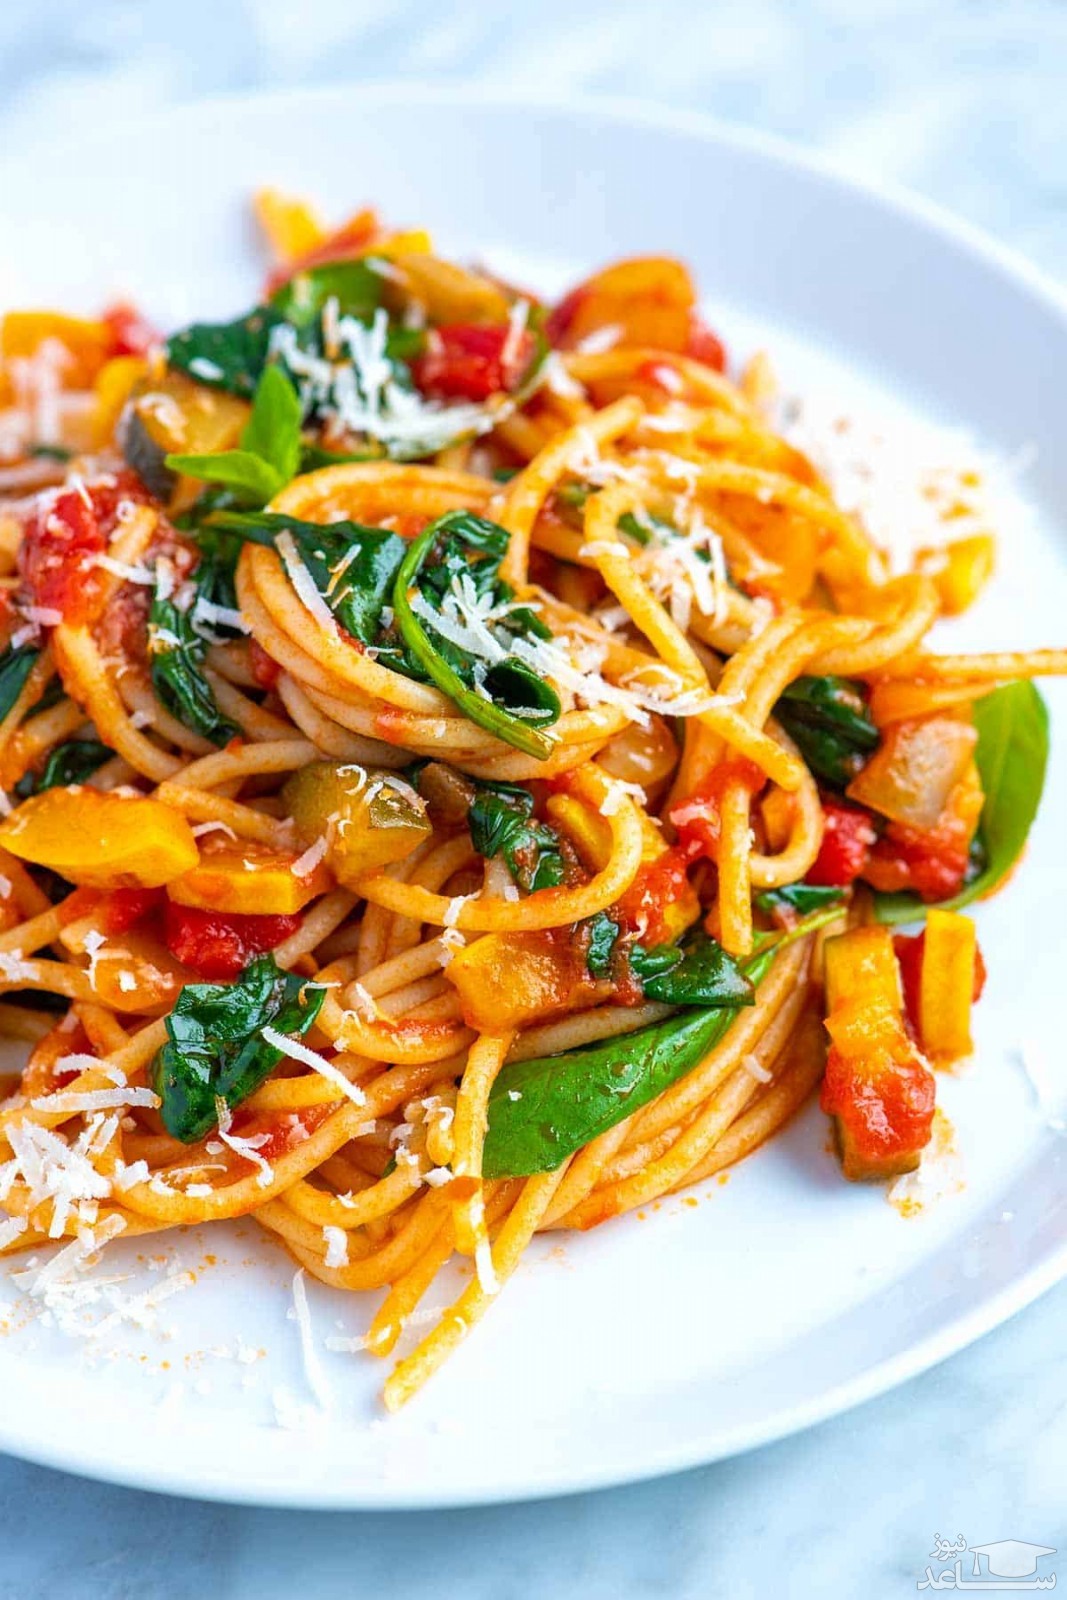  اسپاگتی با عطر ریحان